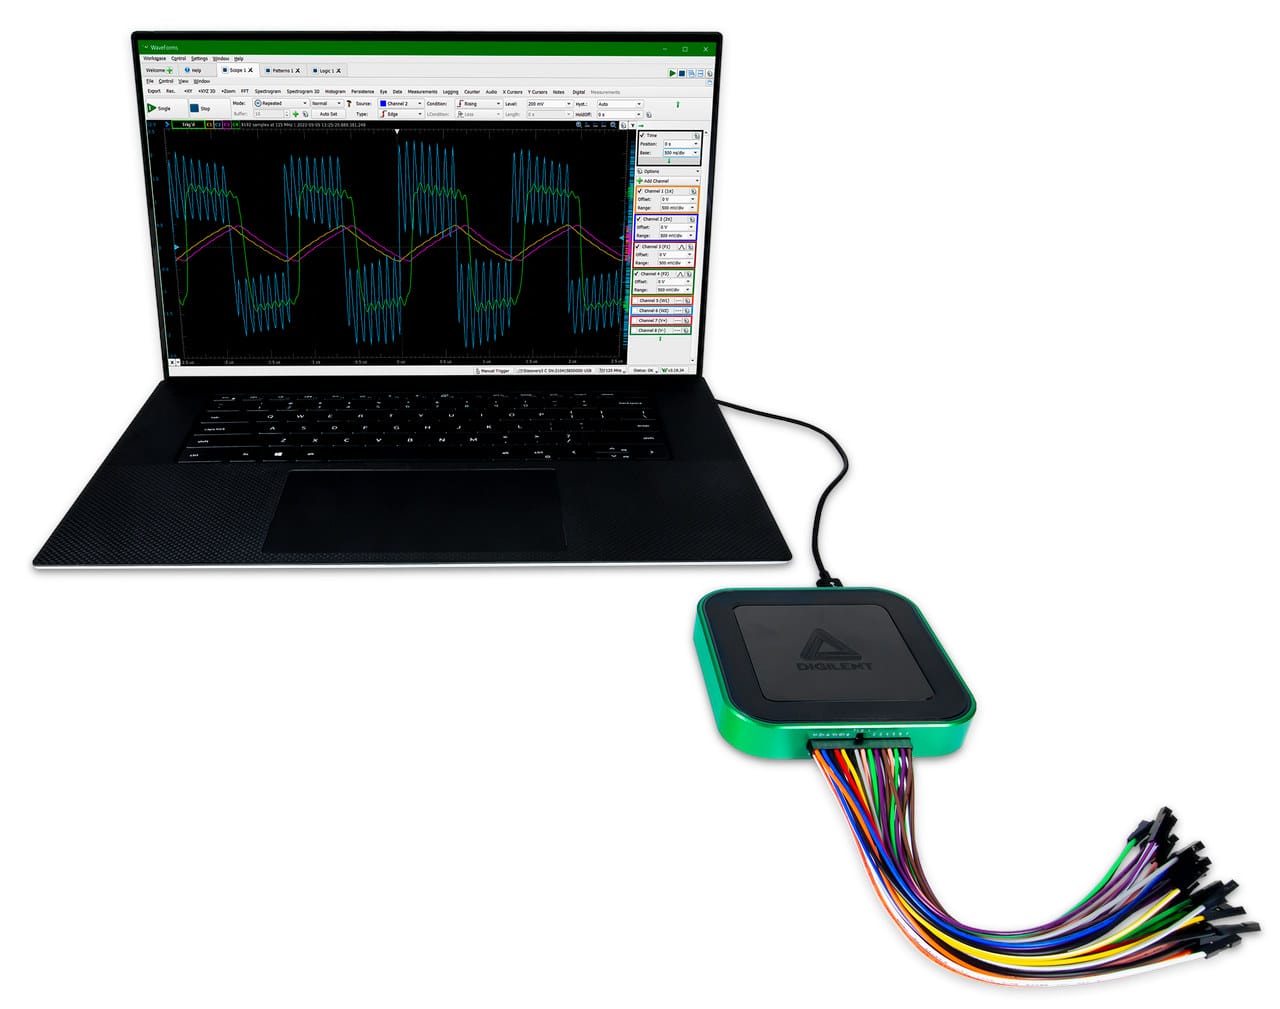 USB oscilloscope WaveForms software